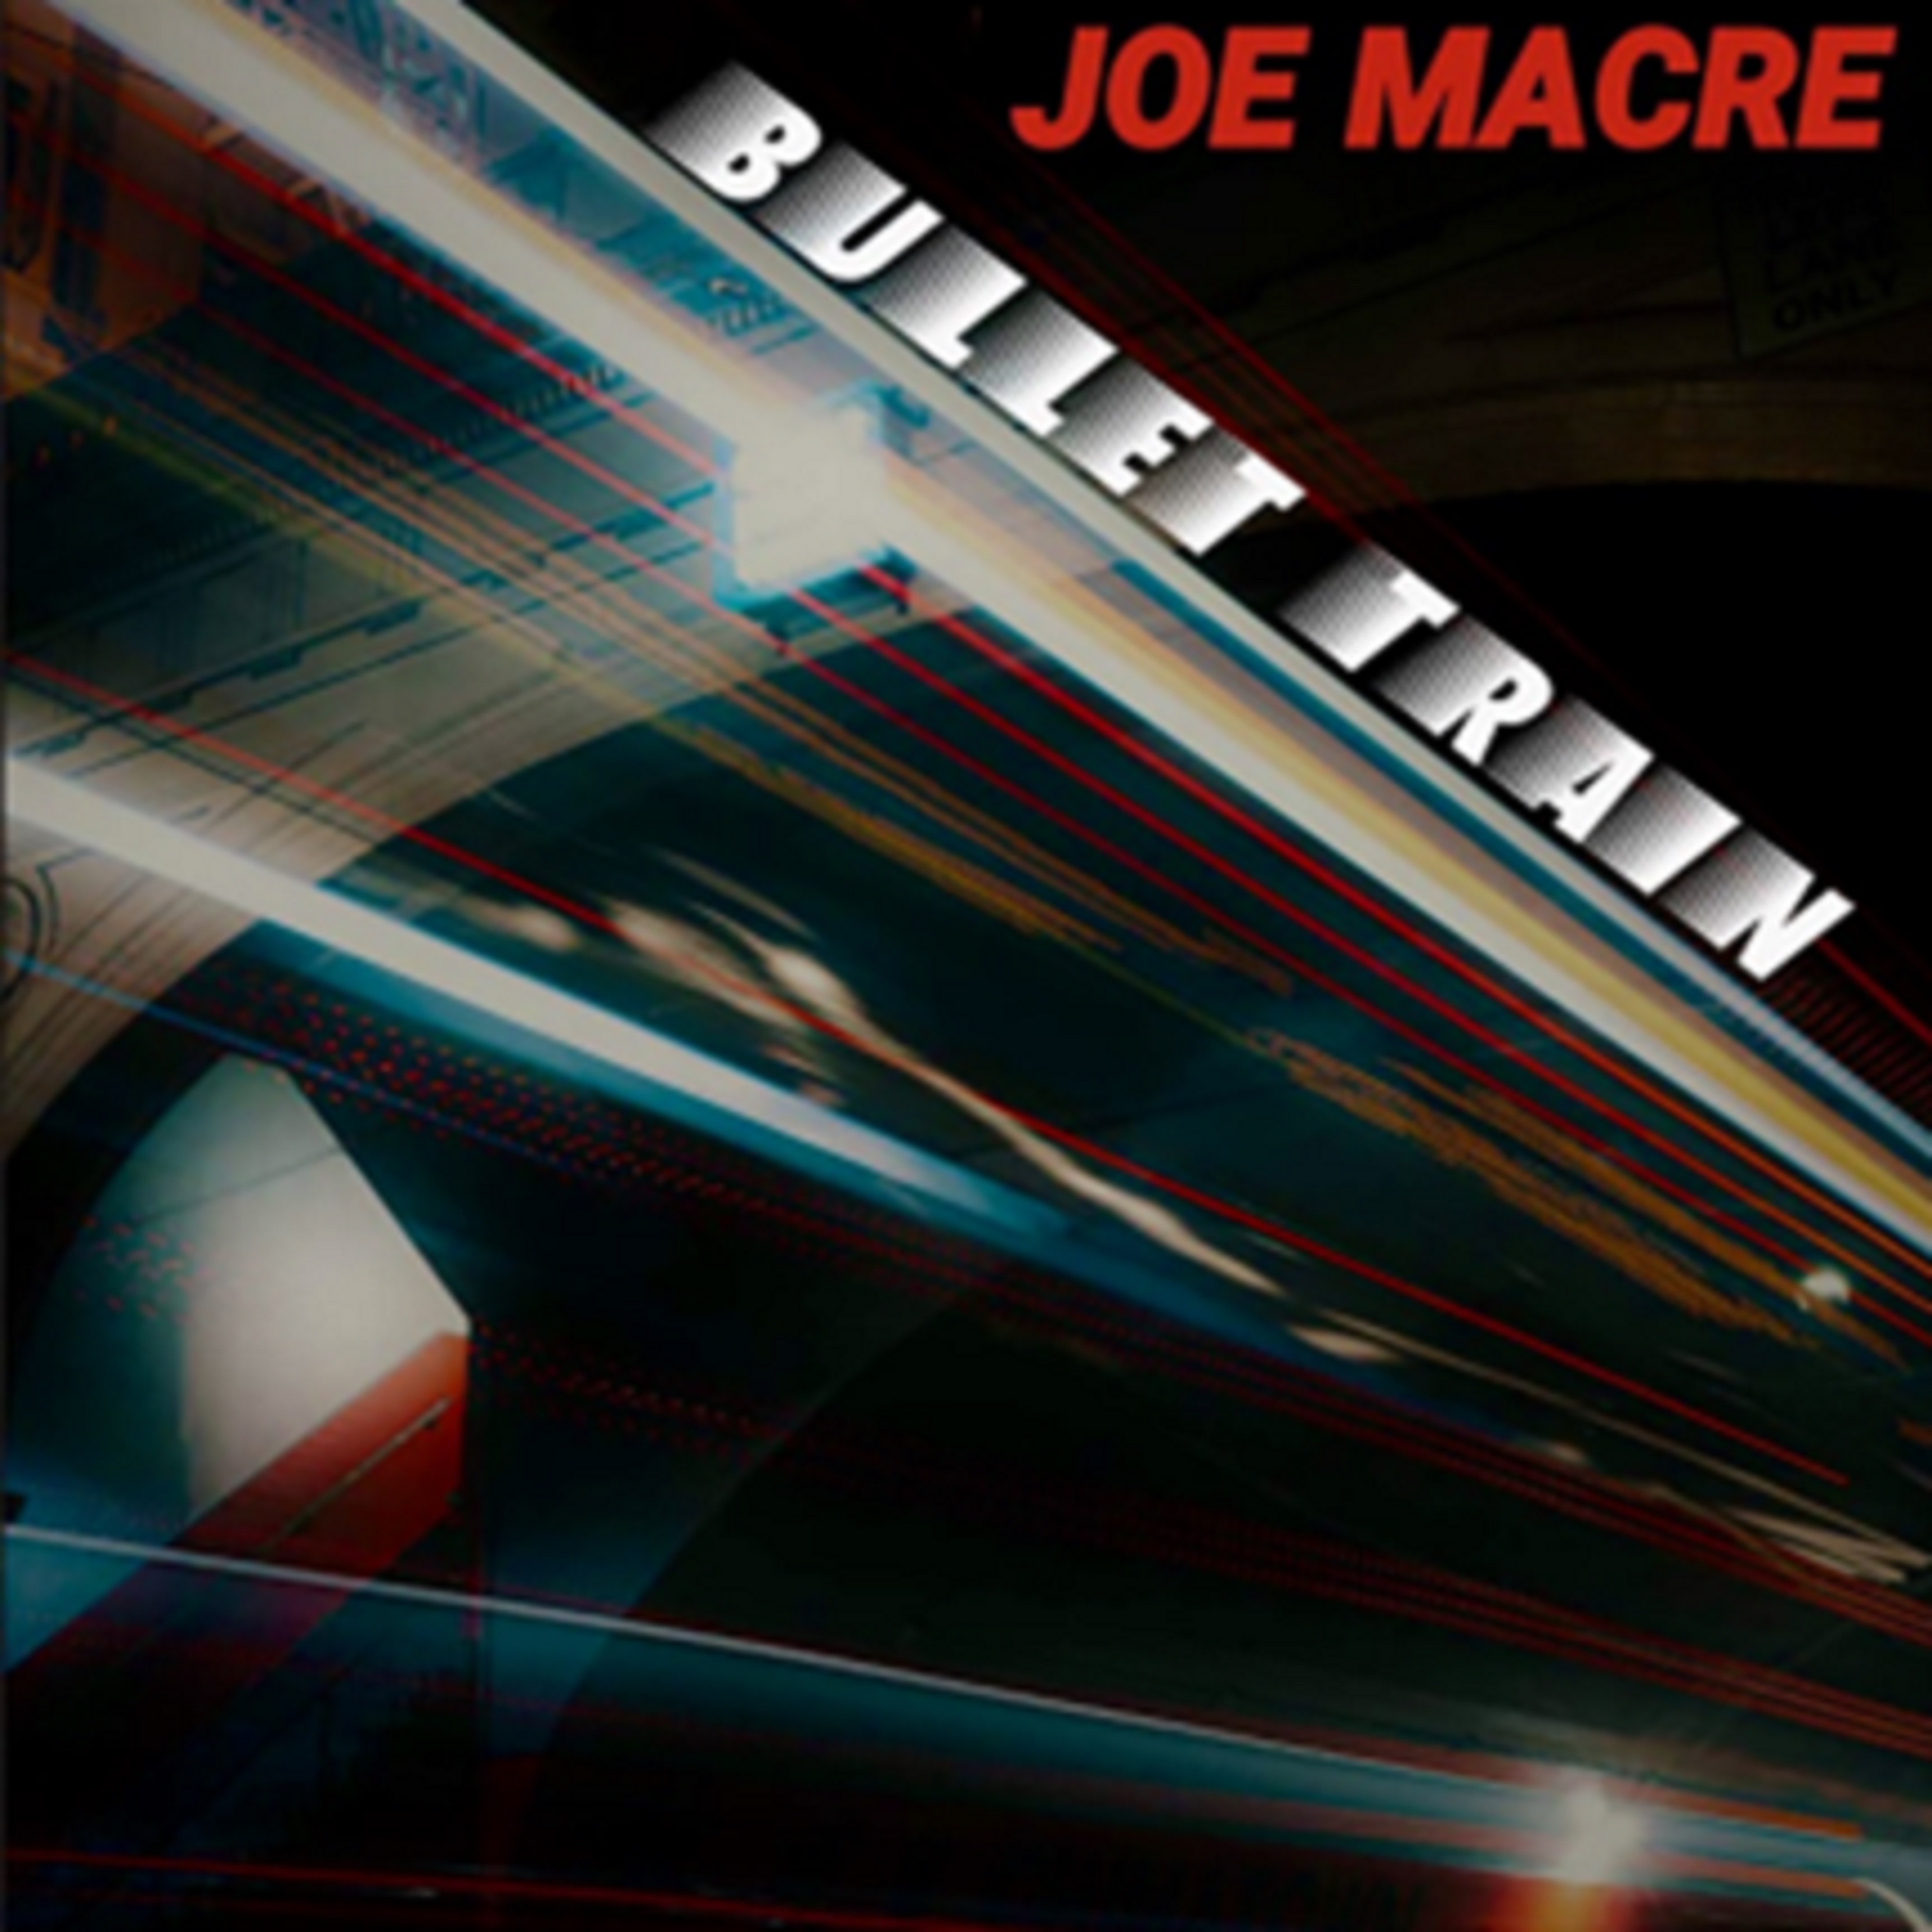 Joe Macre: Solo Debut for Former "Crack the Sky" Bassist